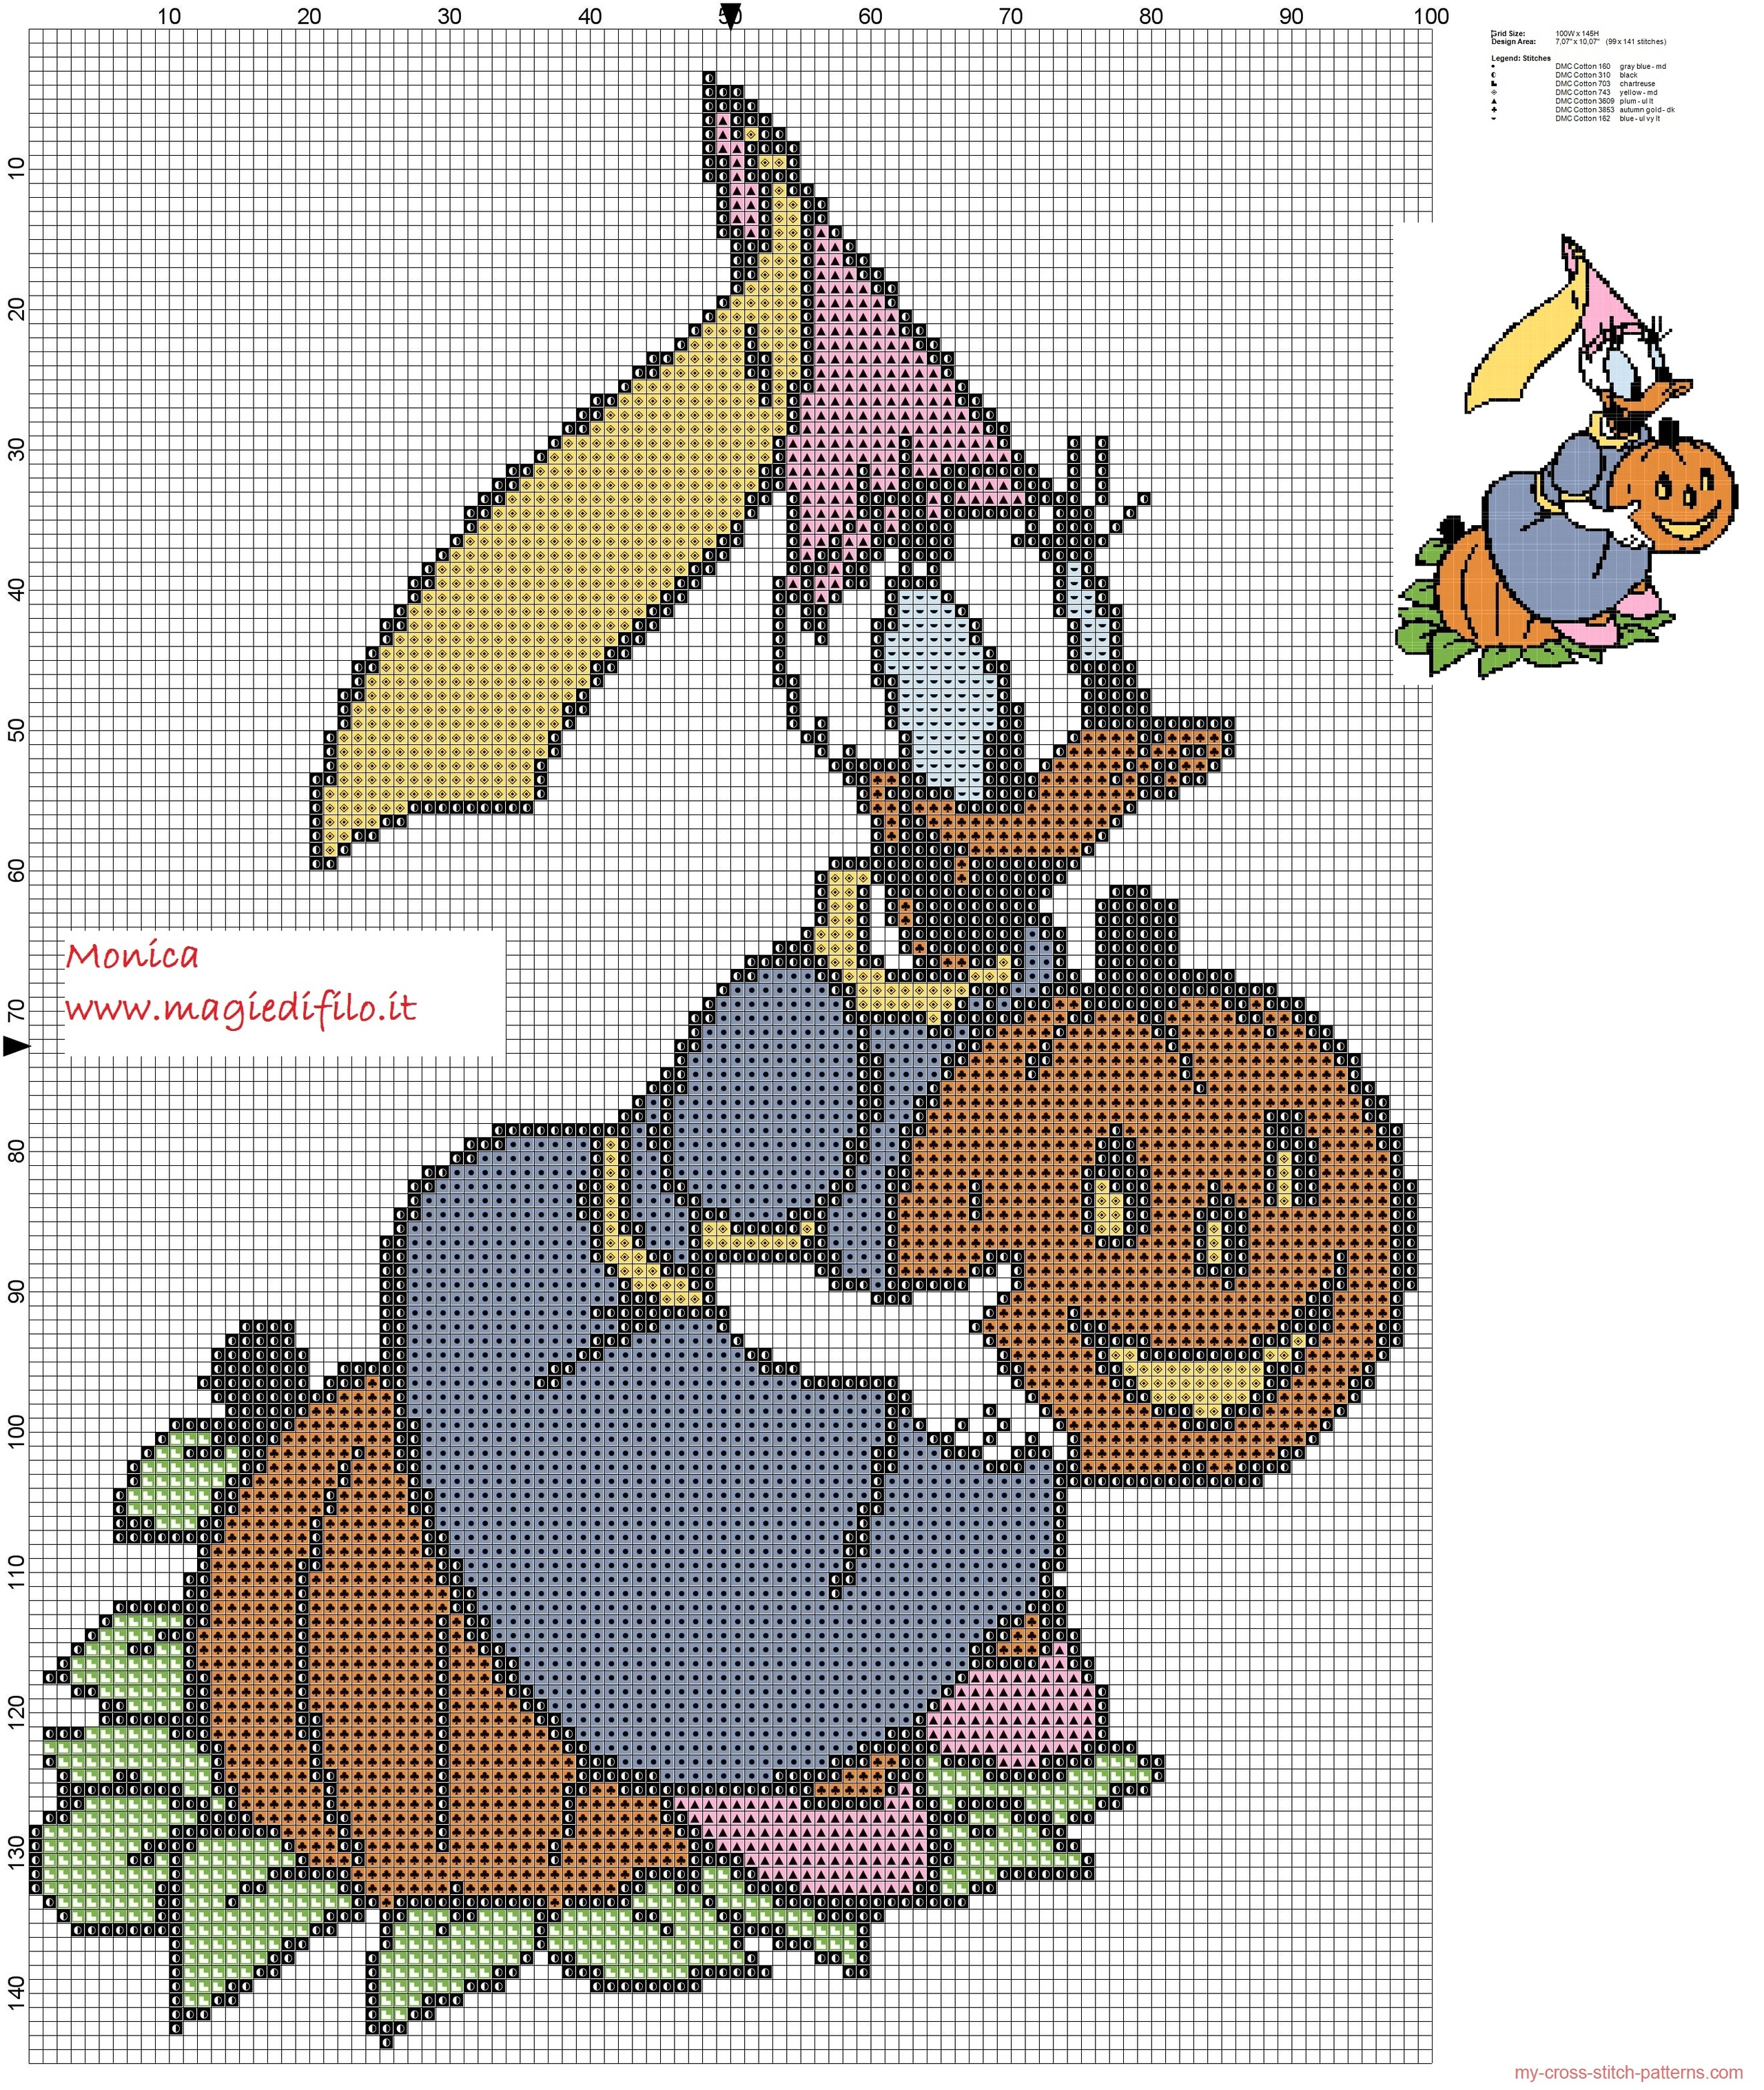 daisy_with_pumpkin_cross_stitch_pattern_